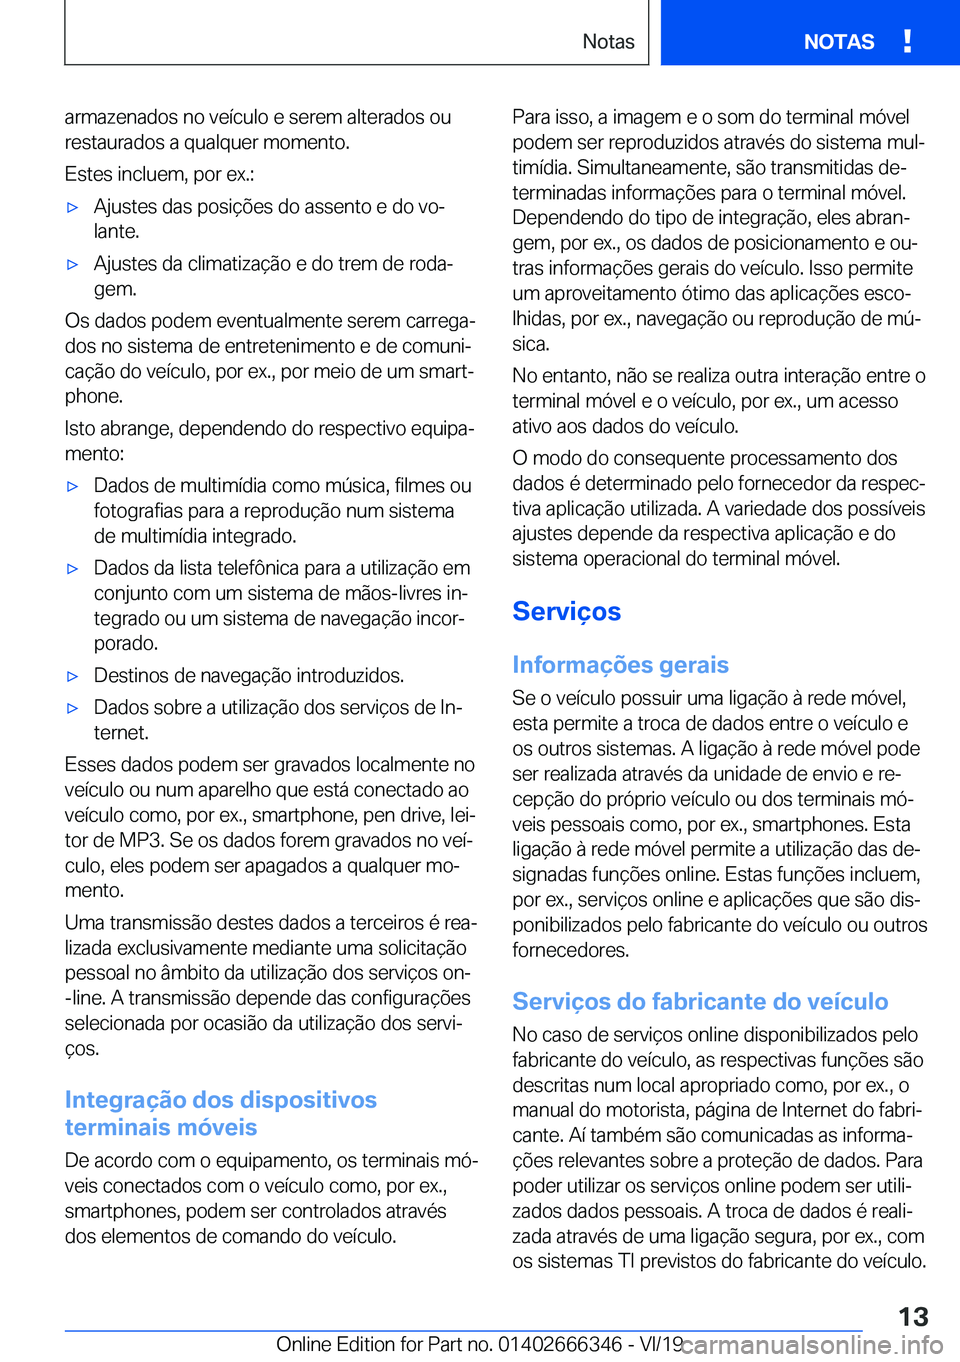 BMW 4 SERIES COUPE 2020  Manual do condutor (in Portuguese) �a�r�m�a�z�e�n�a�d�o�s��n�o��v�e�